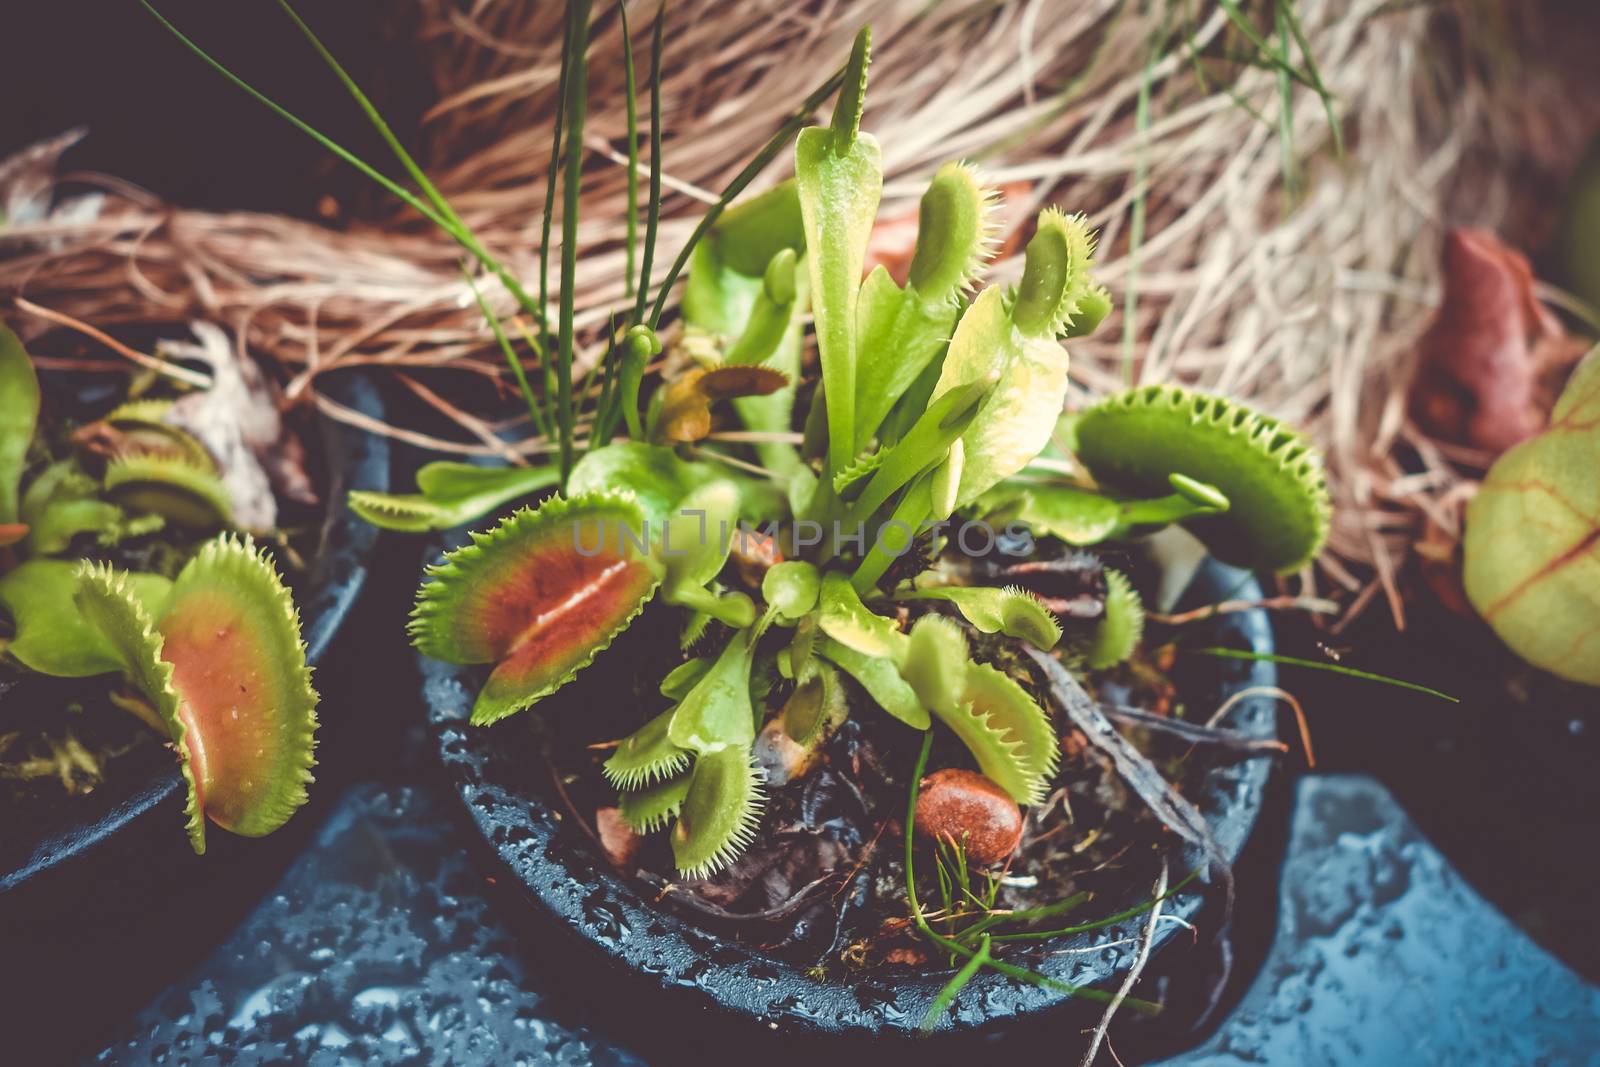 Venus flytrap, carnivorous plant by daboost